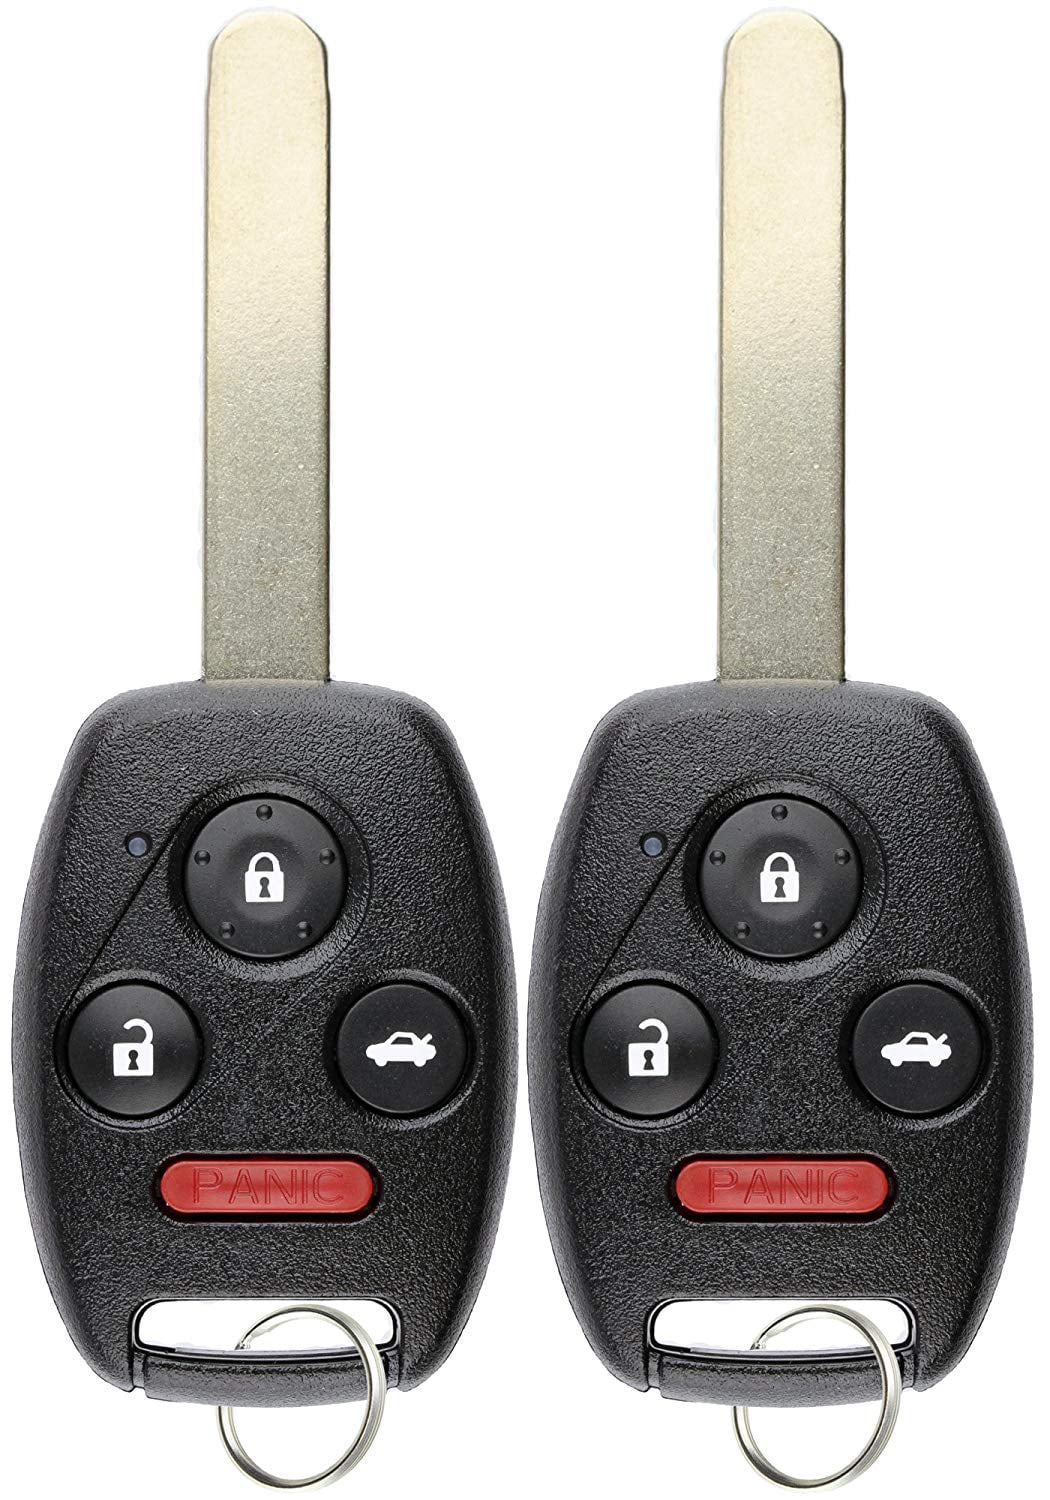 Honda Civic 2006-2013 3 Button Remote Key Fob N5F-S0084A CUT BY CODE SERVICE